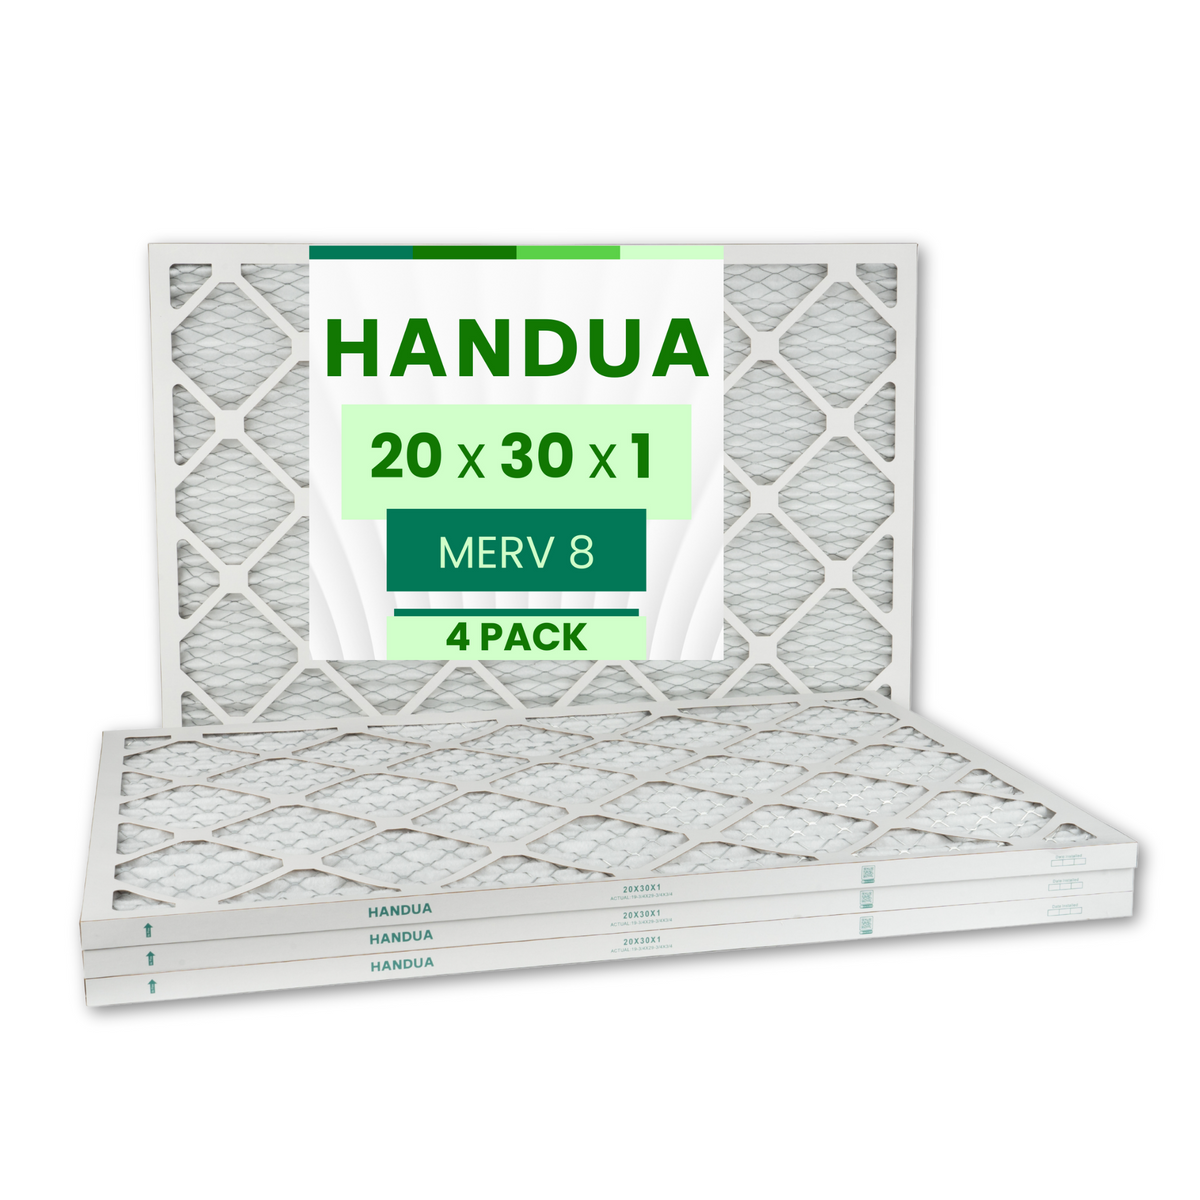 Handua 20x30x1 Air Filter MERV 8 Dust Control, Plated Furnace AC Air Replacement Filter, 4 Pack (Actual Size: 19.75" x 29.75" x 0.75")